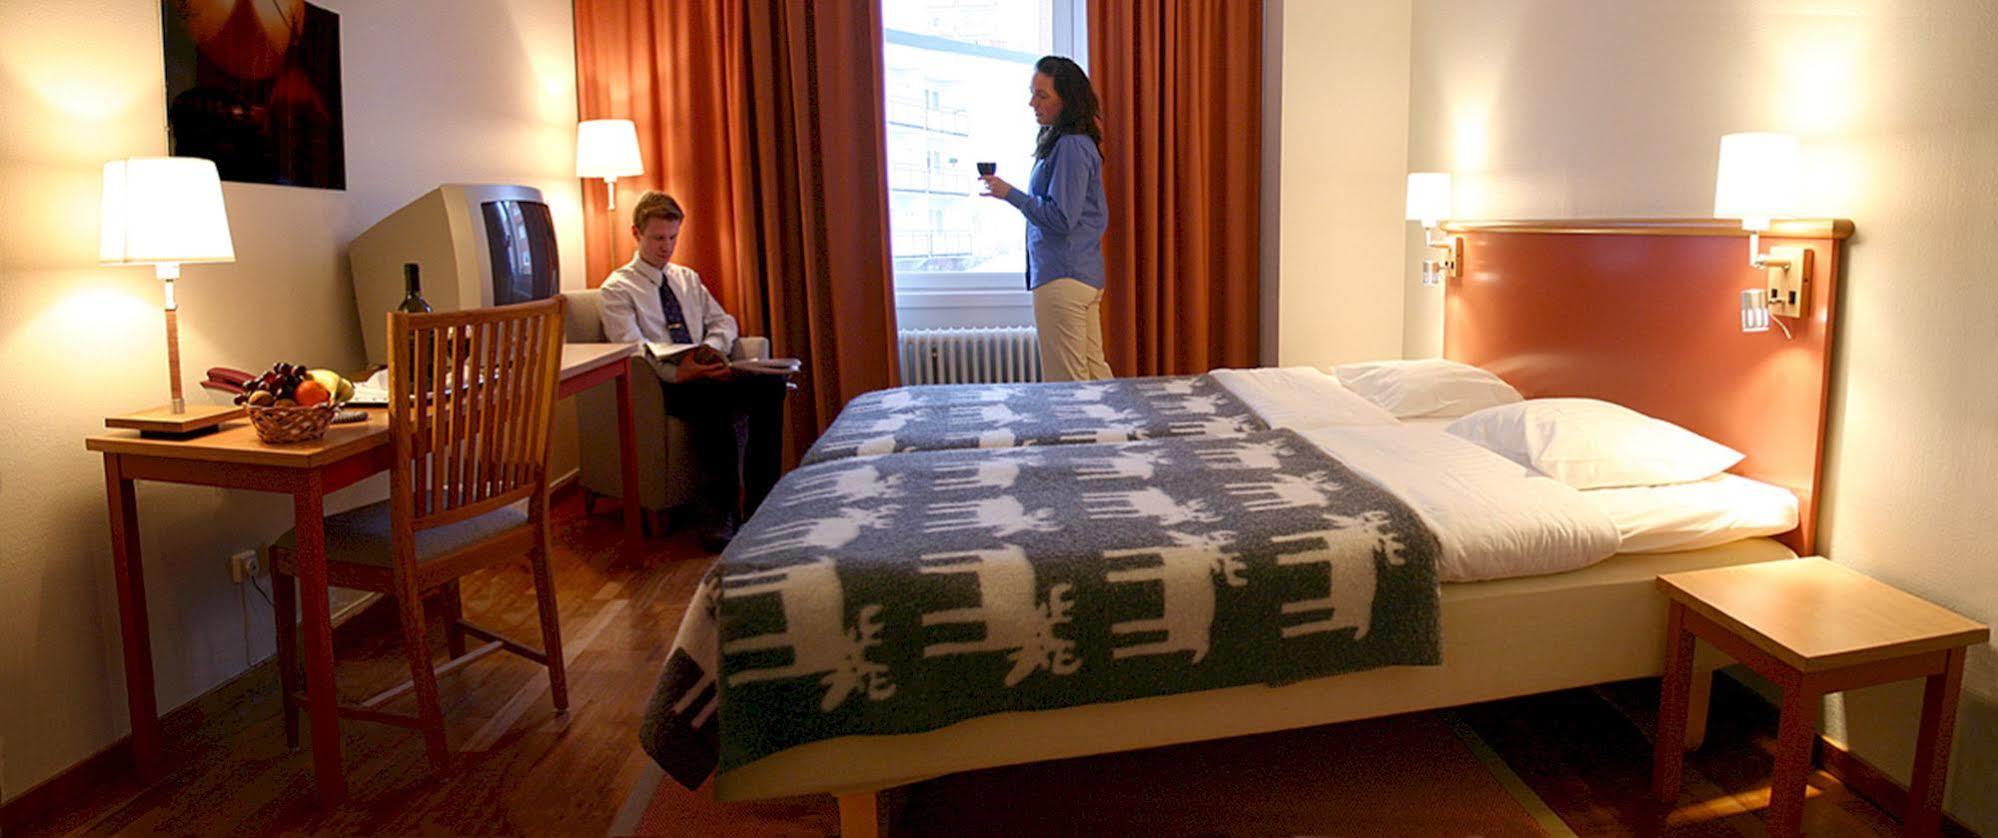 Hotell Kebne Kiruna Exteriér fotografie